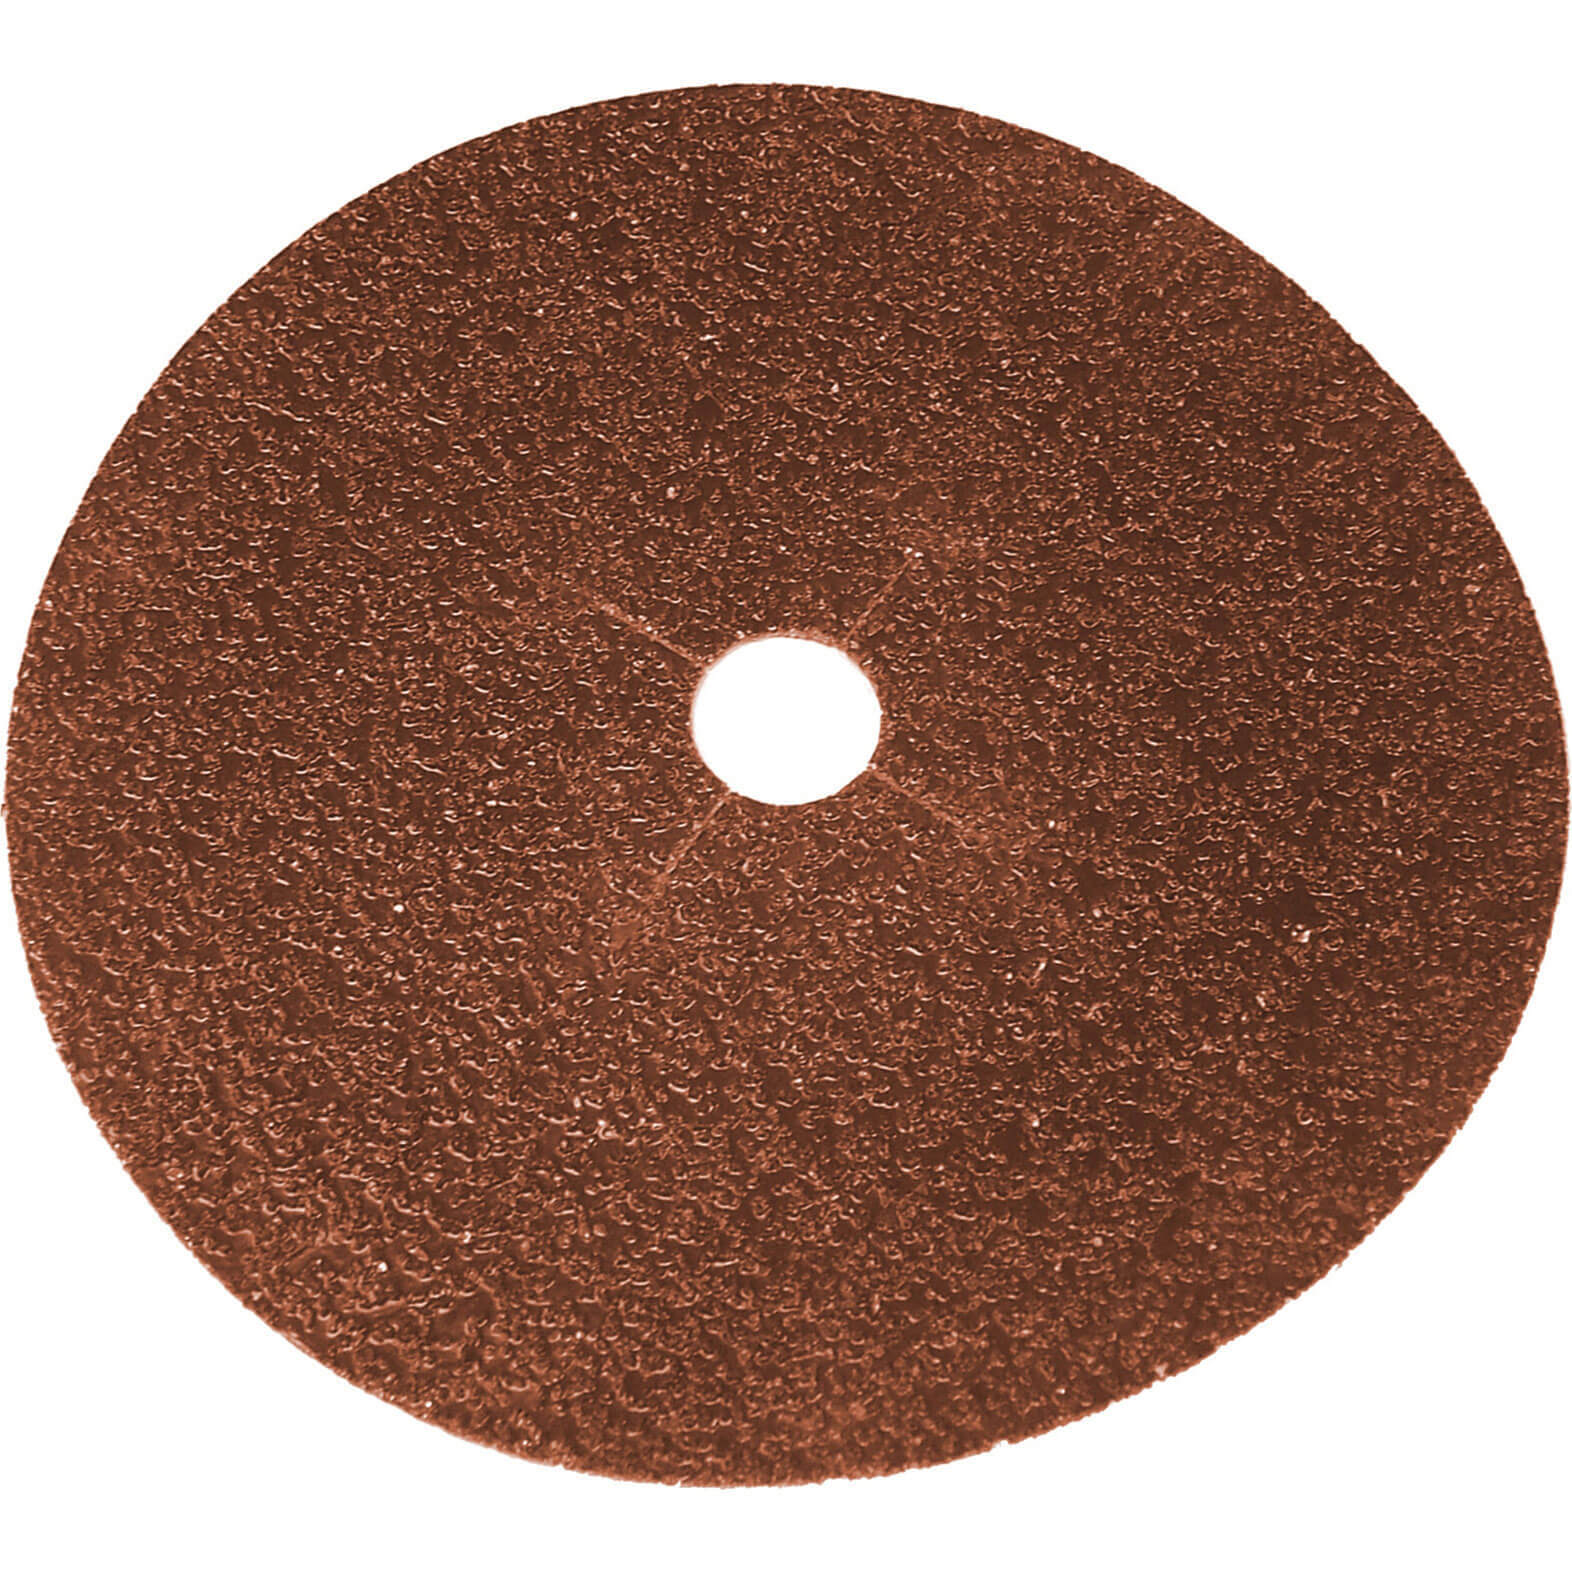 Image of Faithfull Aluminium Oxide Sanding Discs 178mm 80g